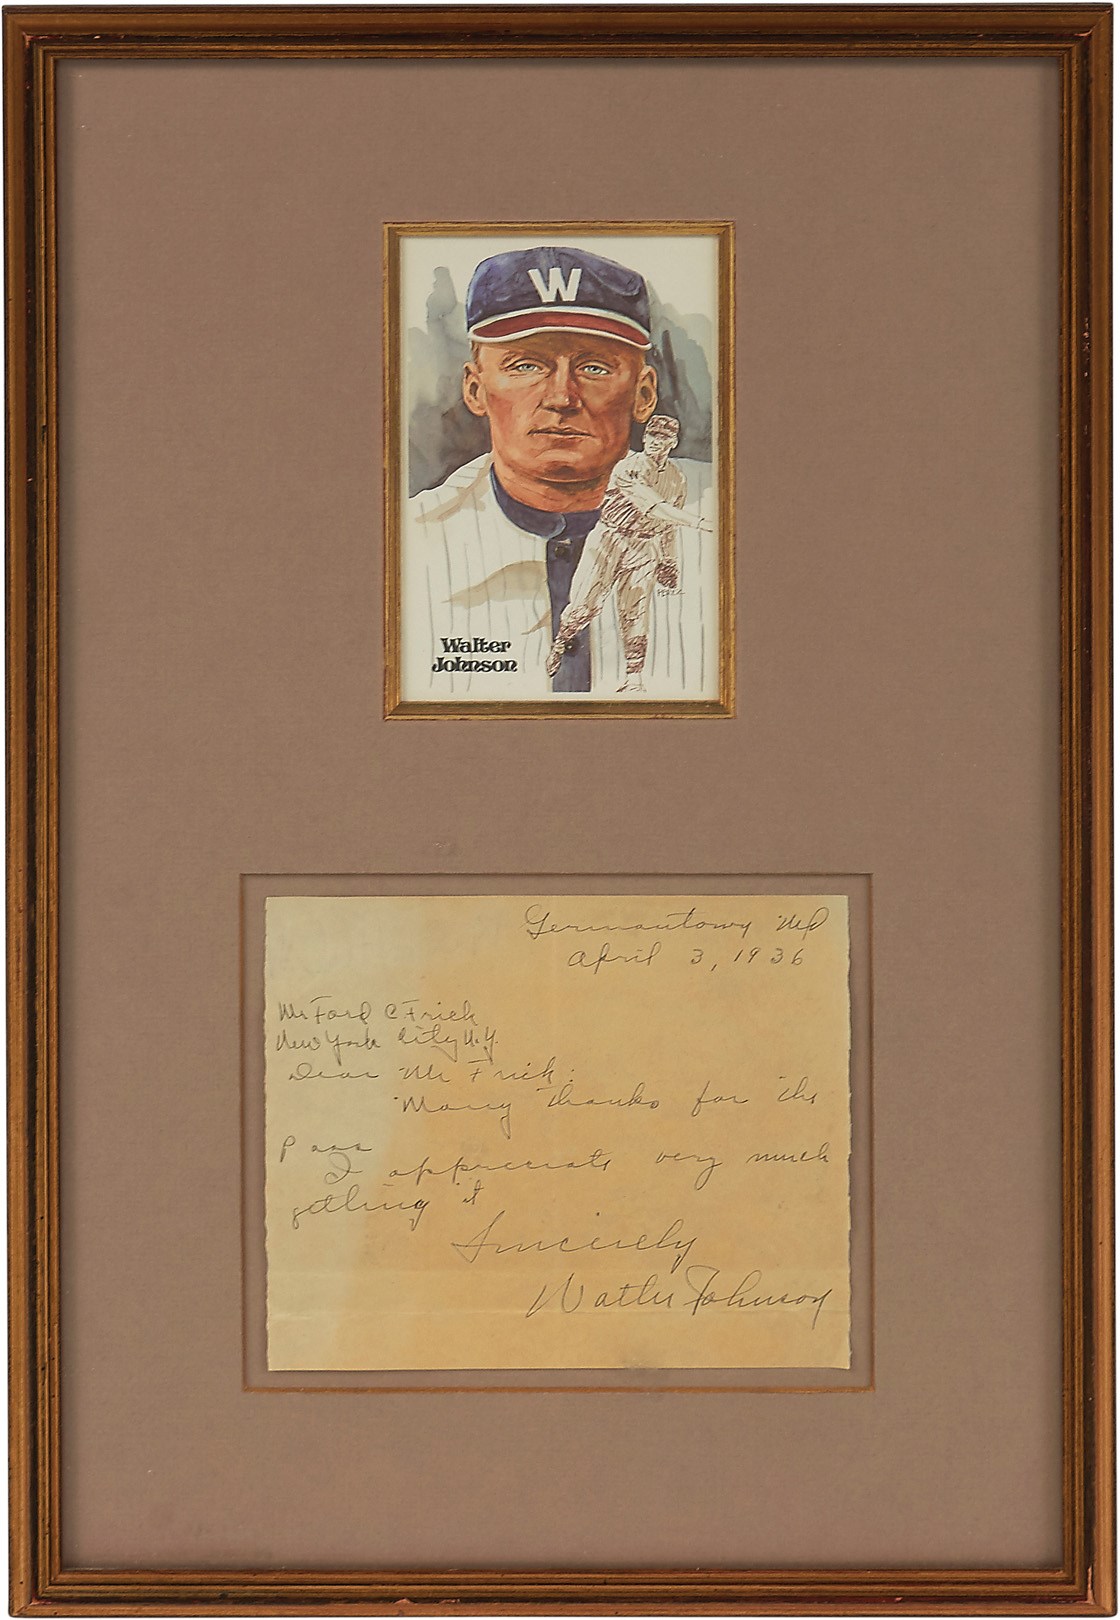 Baseball Autographs - 1936 Walter Johnson "Thank You" Letter to NL President Ford Frick (PSA)